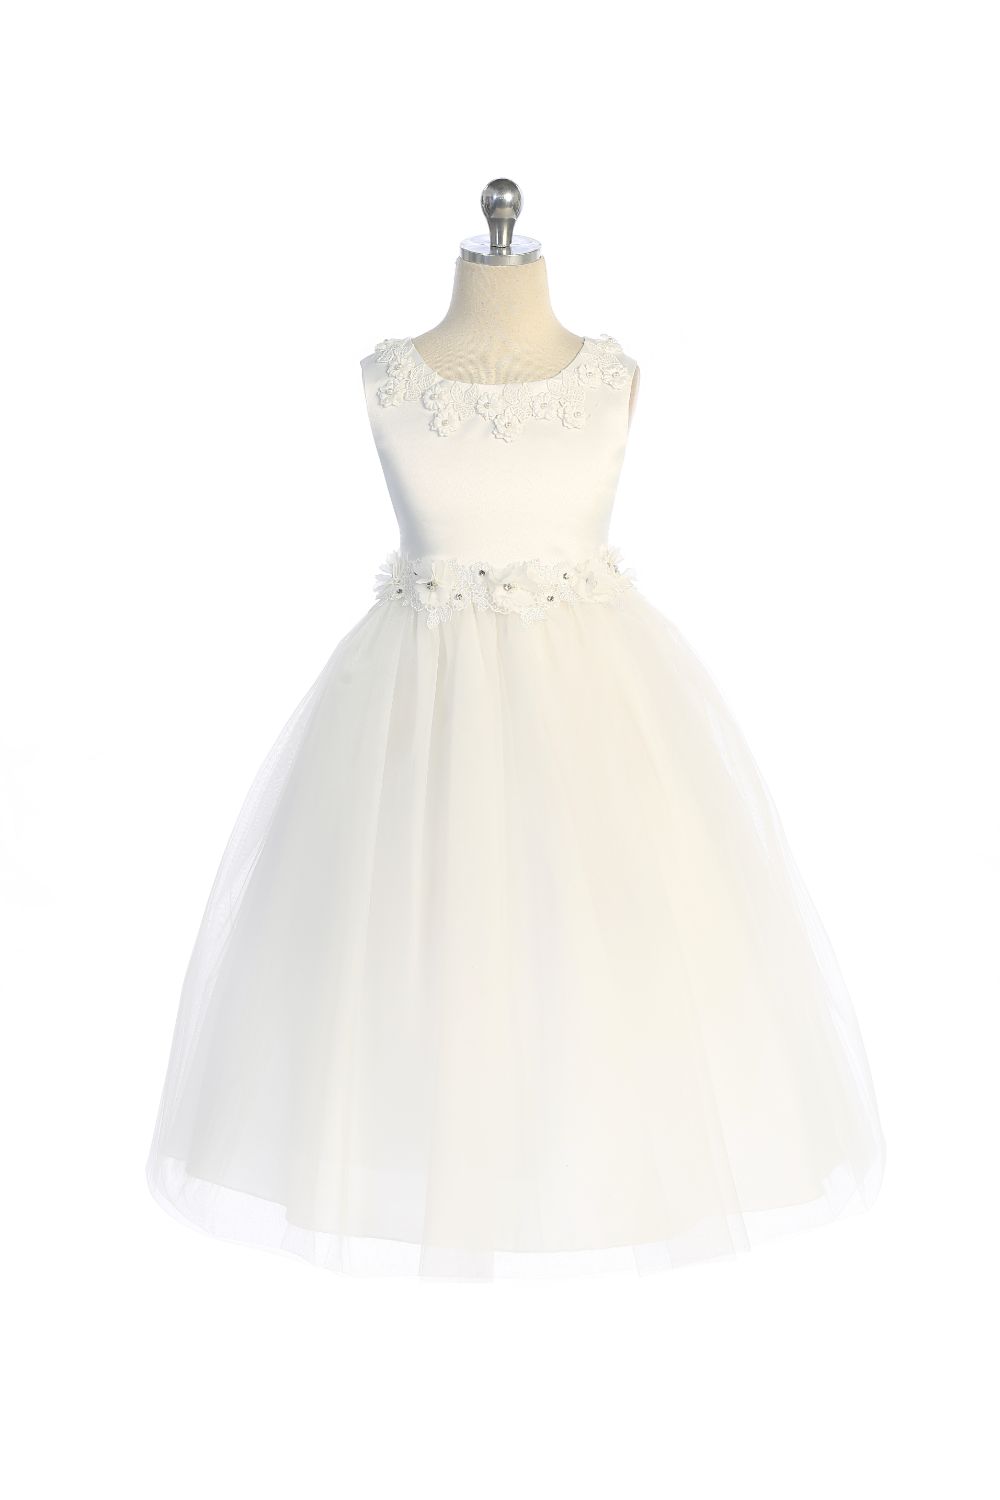 Luxurious Princess Ballgown Dress w/ Floral Trim